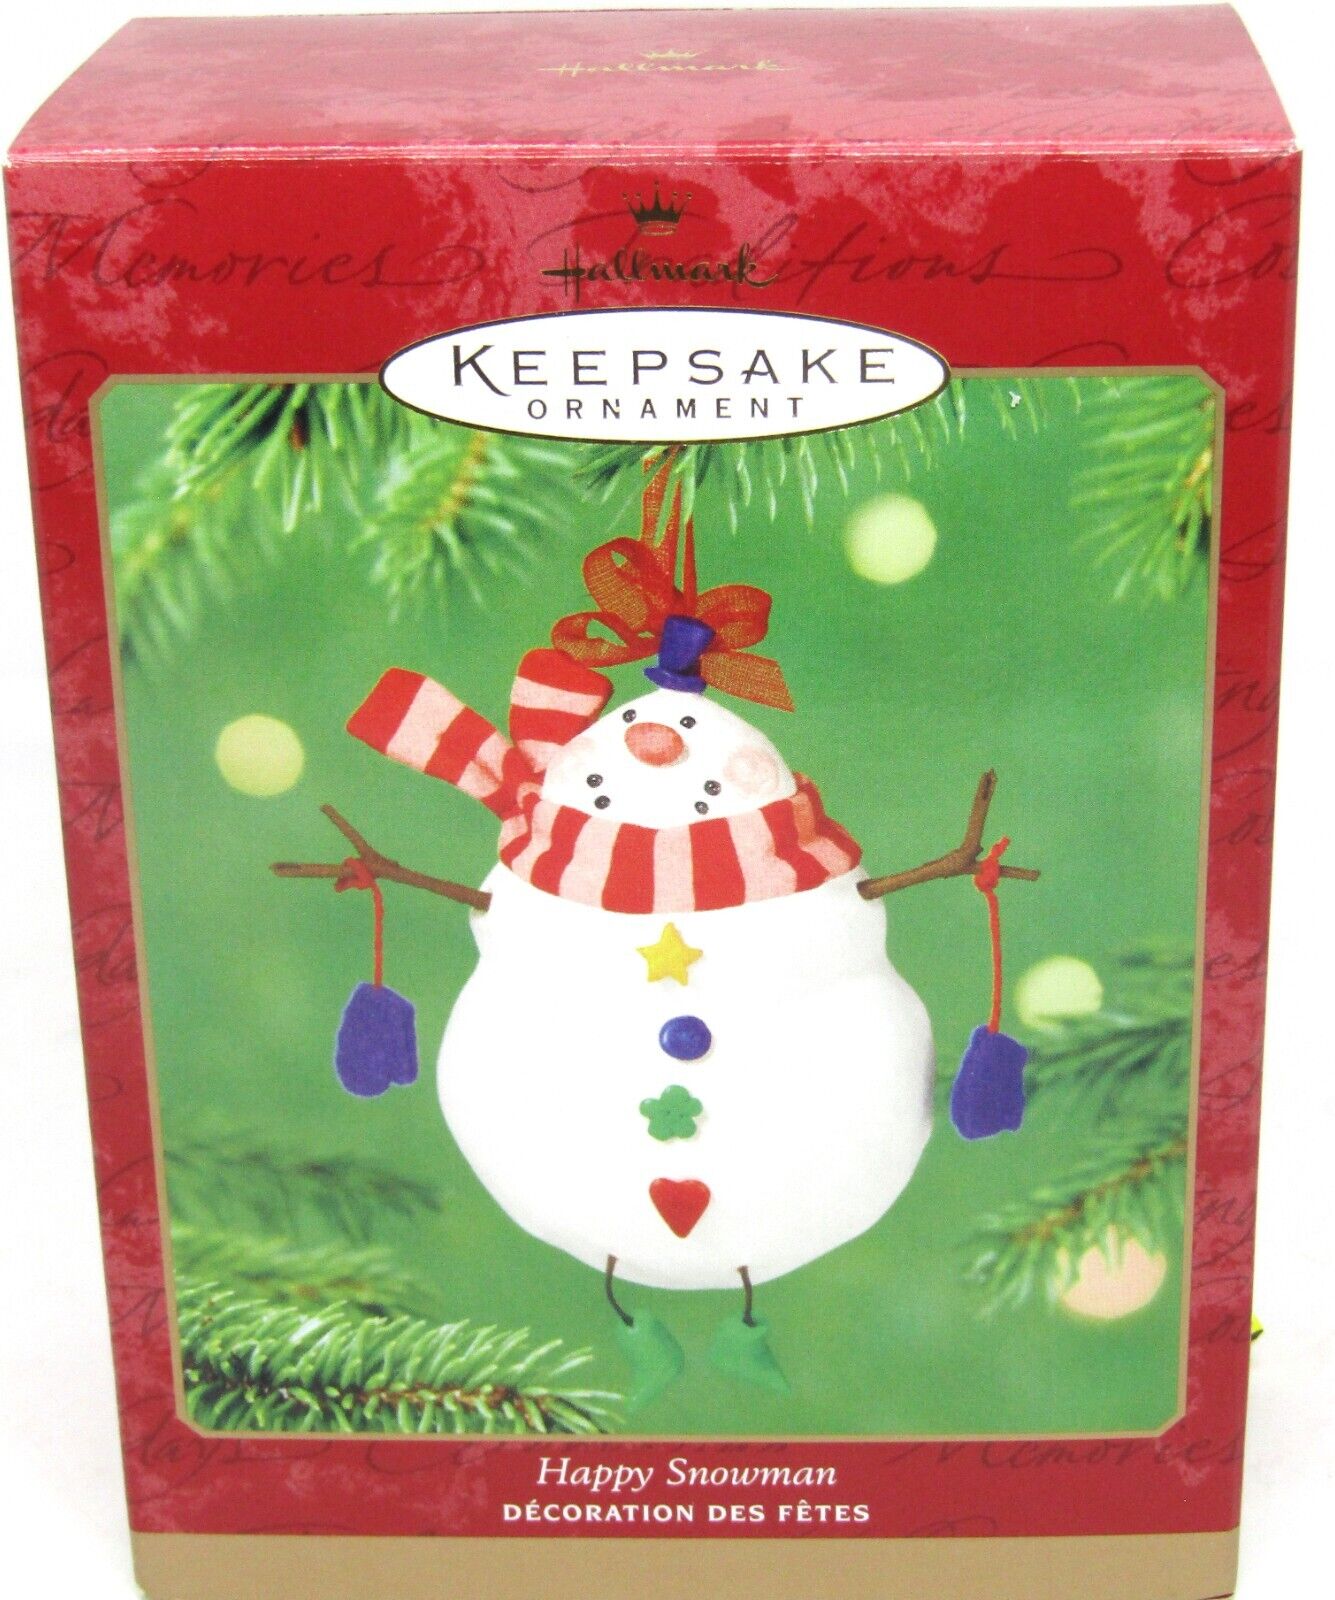 Snowman Ornament 2001 Hallmark Keepsake \